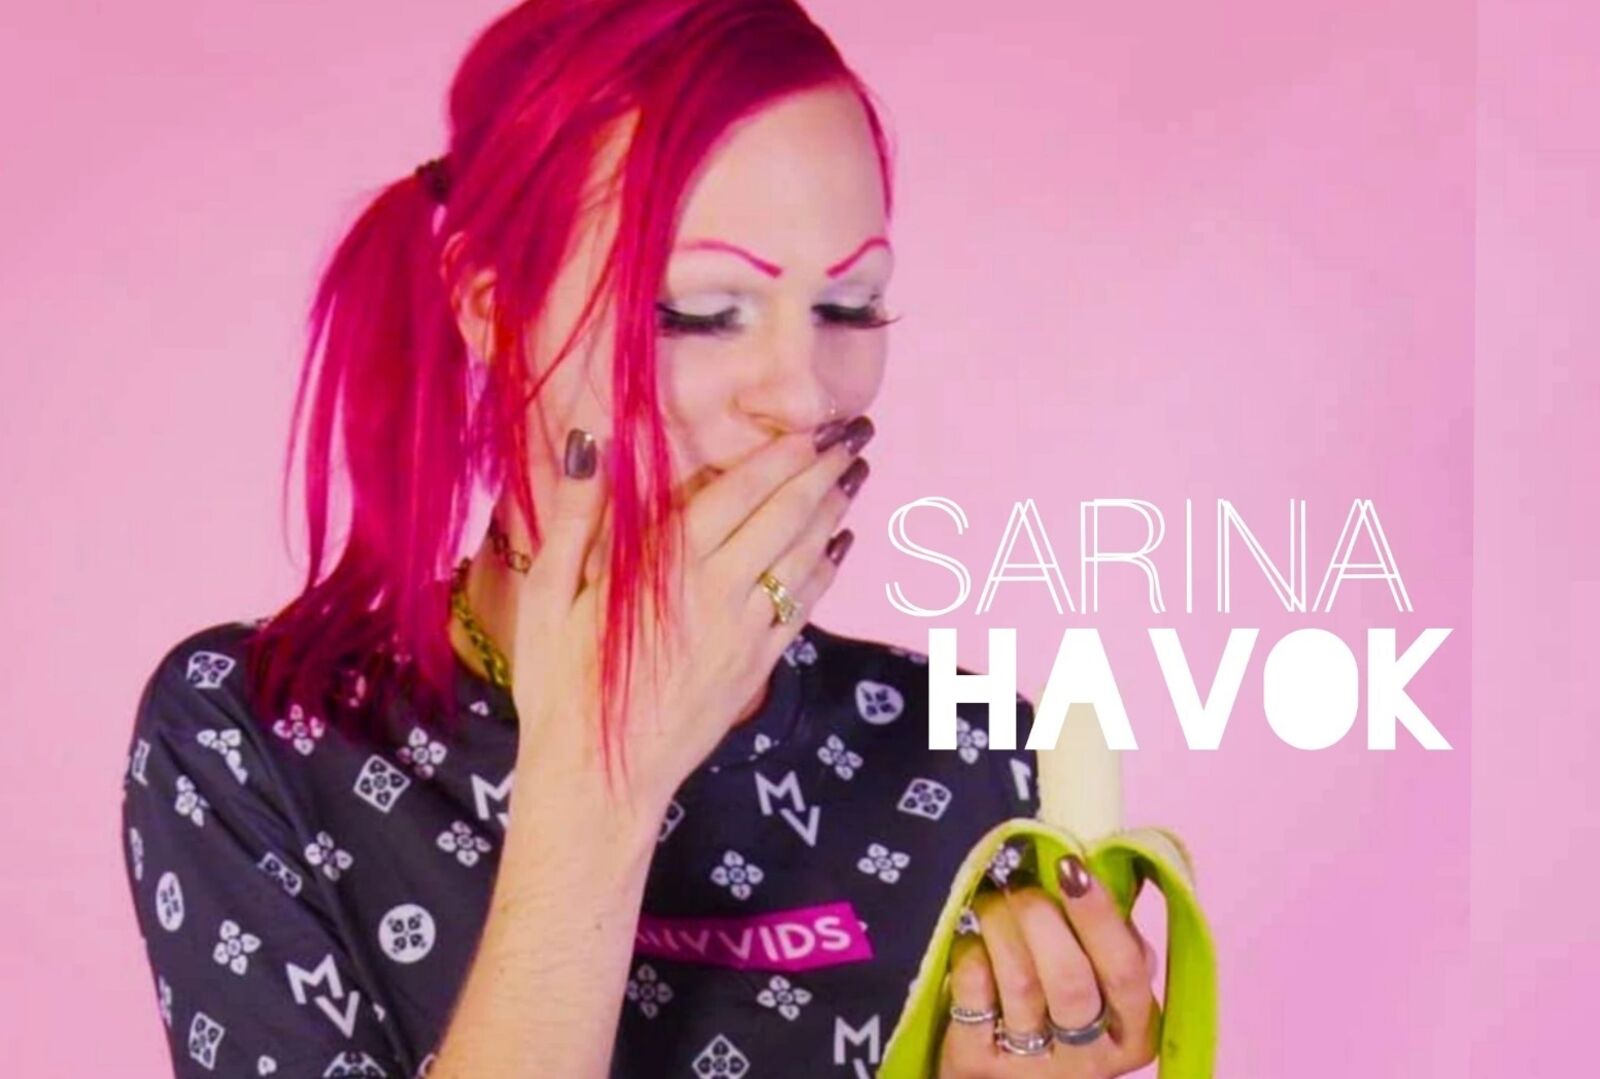 See Sarina Havok profile